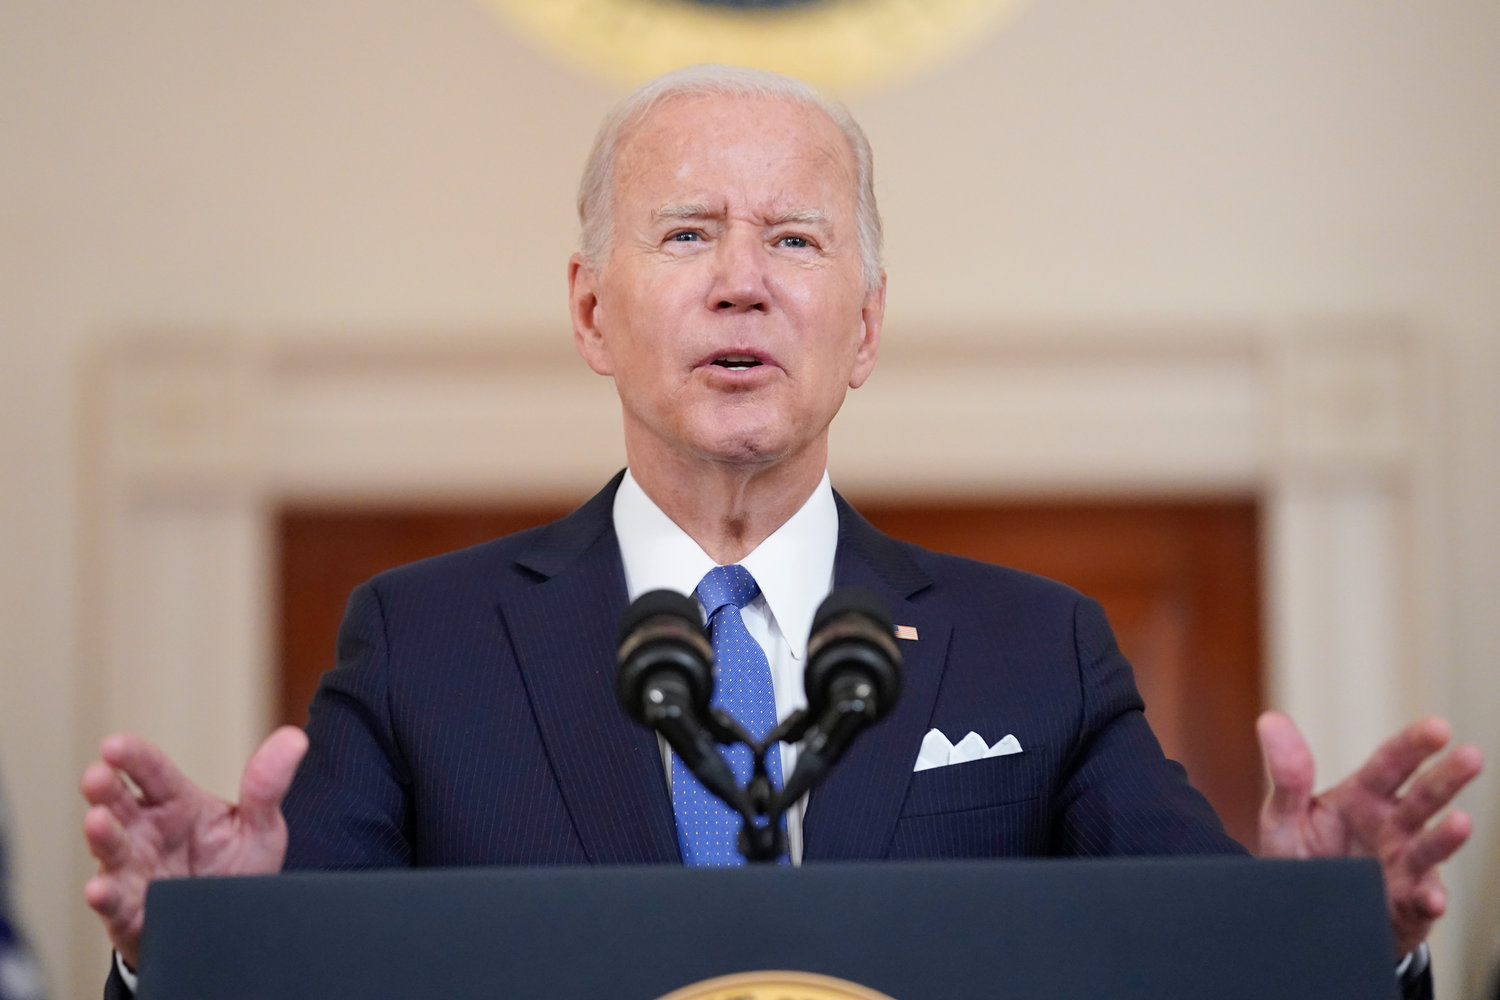 President Joe Biden speaks at the White House in Washington, Friday, June 24, 2022, after the Supreme Court overturned Roe v. Wade. (AP Photo/Andrew Harnik)